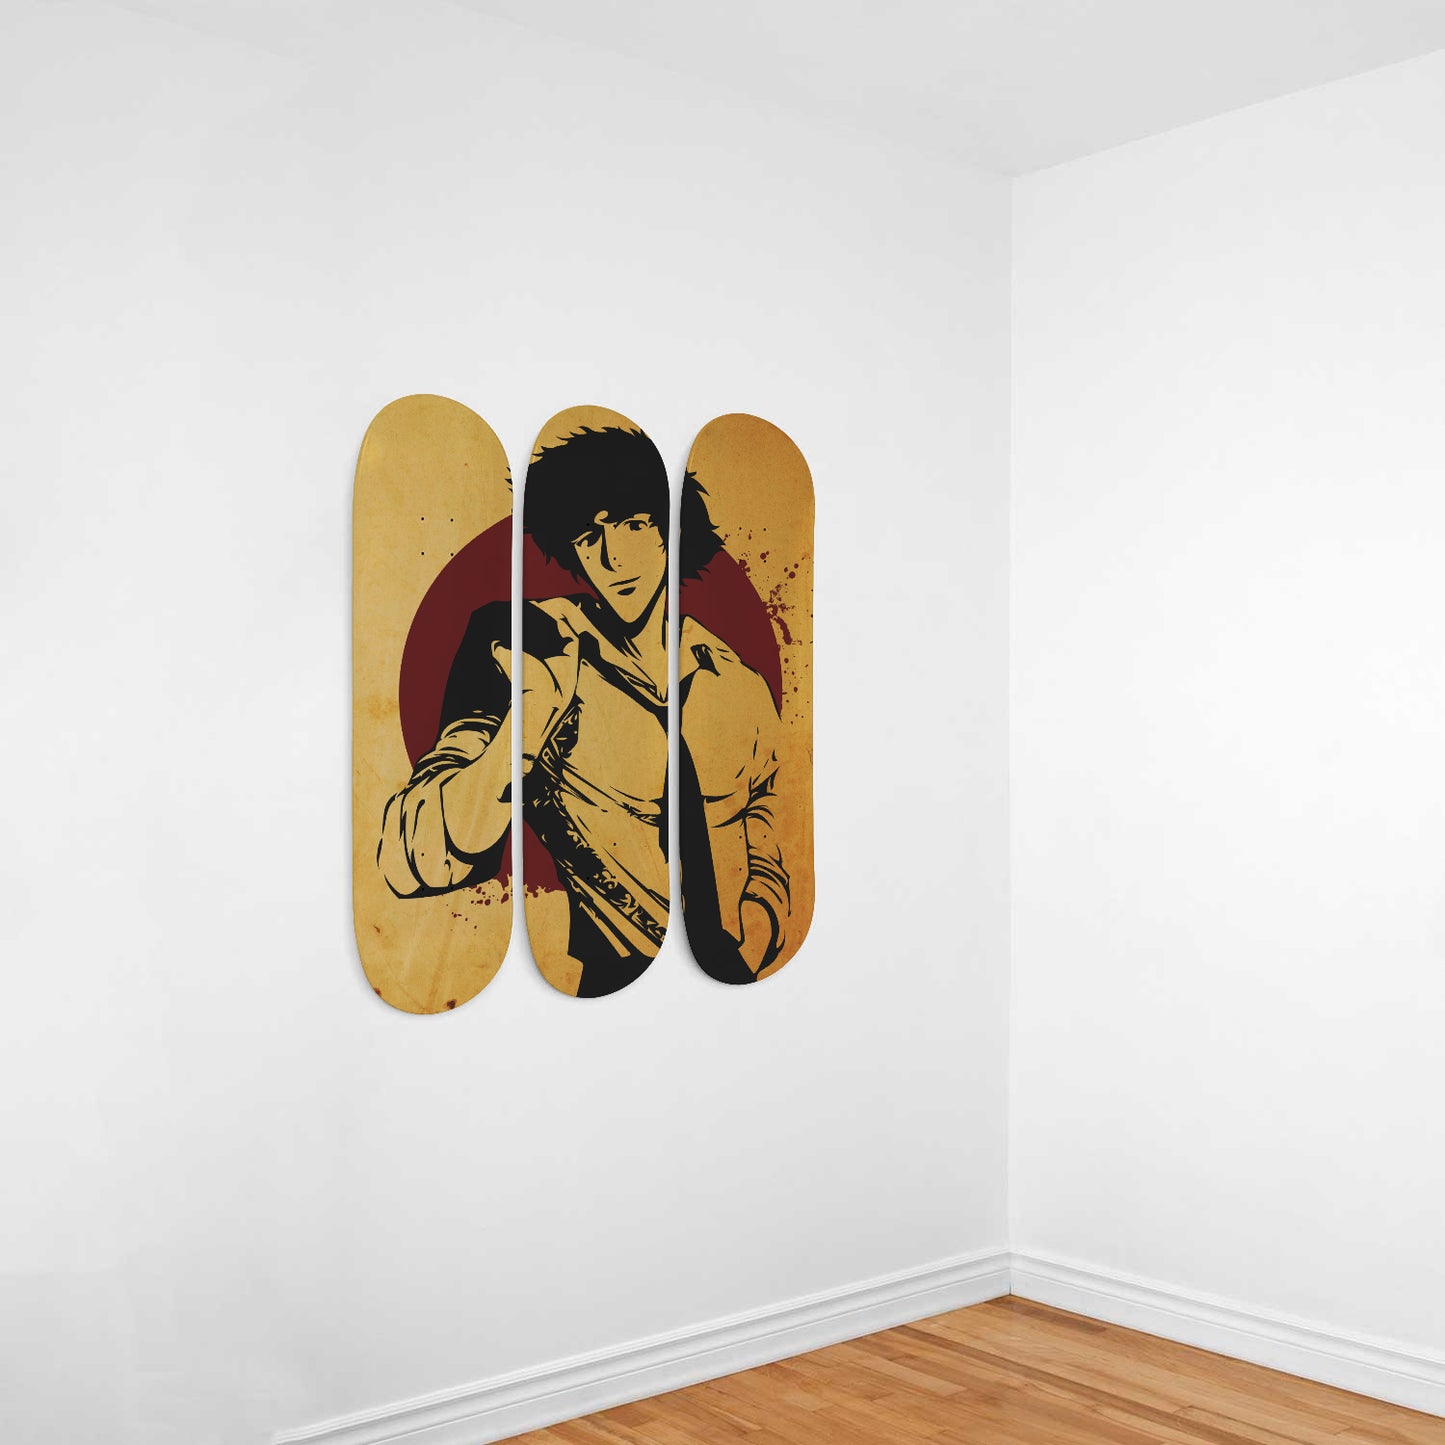 Spike Spiegel Portrait | Wall Art -Cowboy Bebop Inspired | Japanese Neo Noir Science Fiction Anime Inspired | 3 Piece Skateboard Wall Art, Deck Art | Wall Hanging Decor | Custom Painted Wall Art